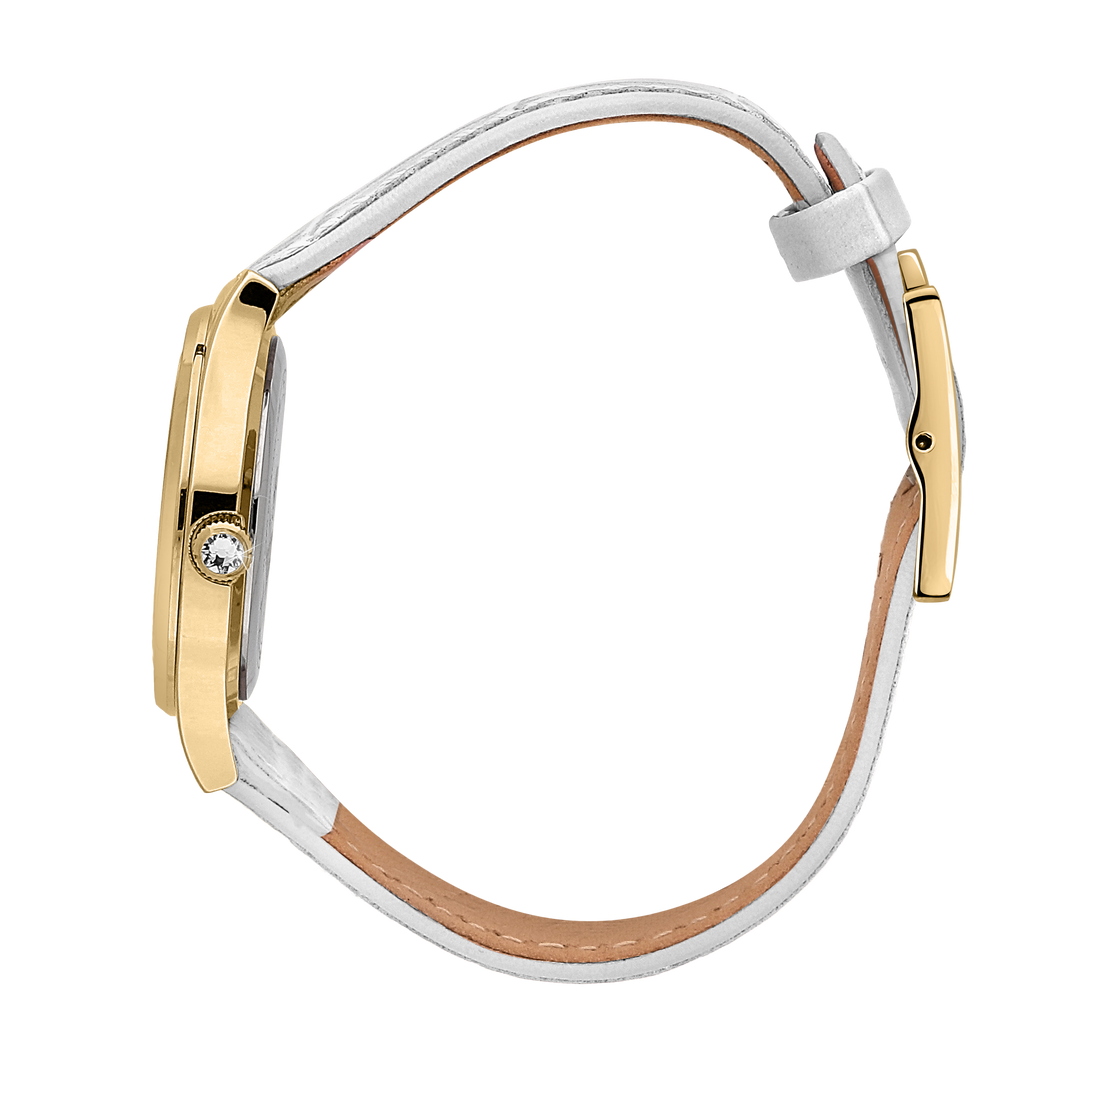 Chiara Ferragni Contamporary White 32mm Watch-Watches-PEROZ Accessories